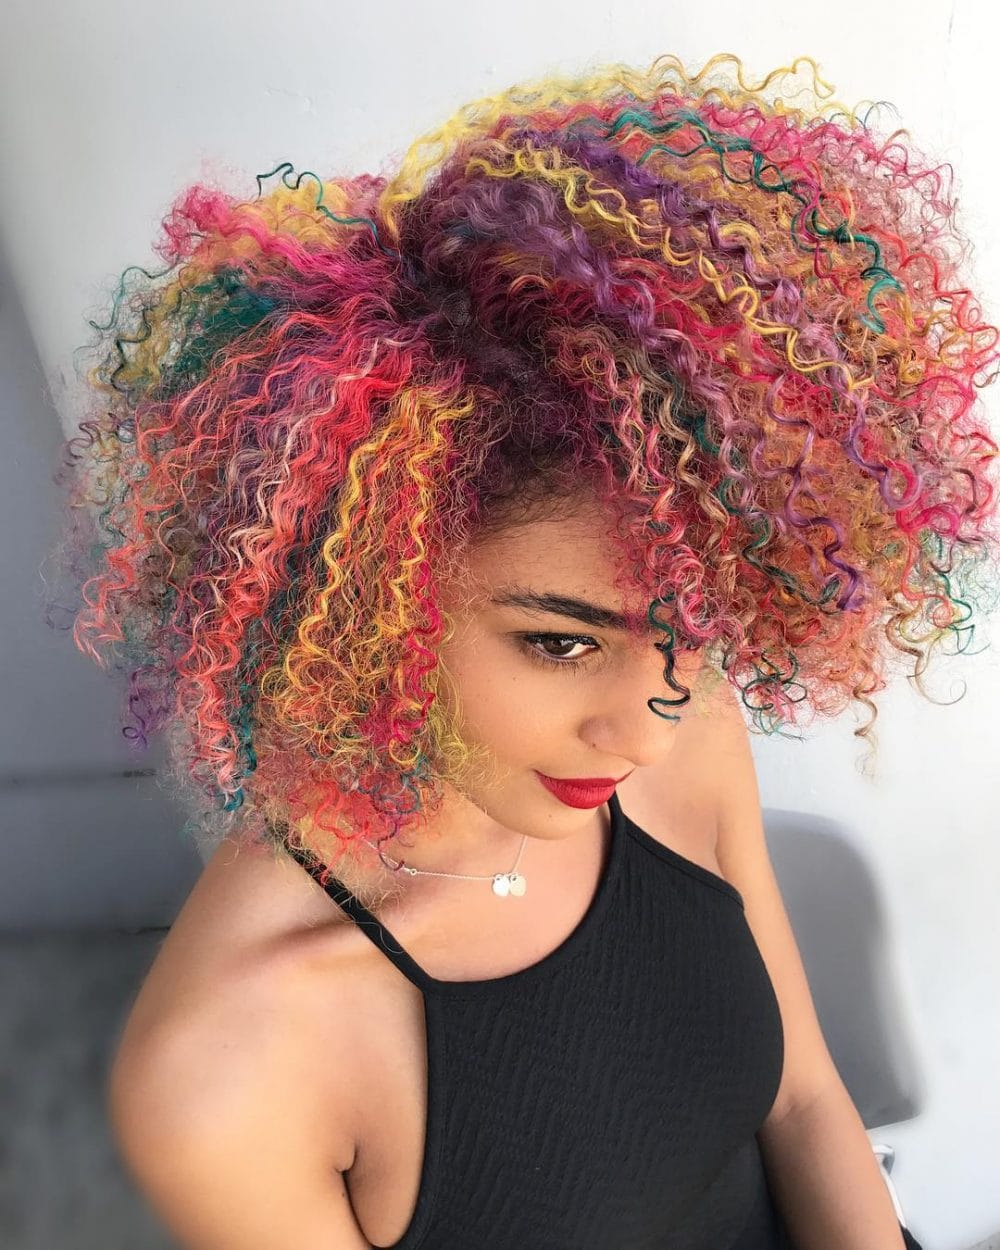 Rainbow Curls hairstyle